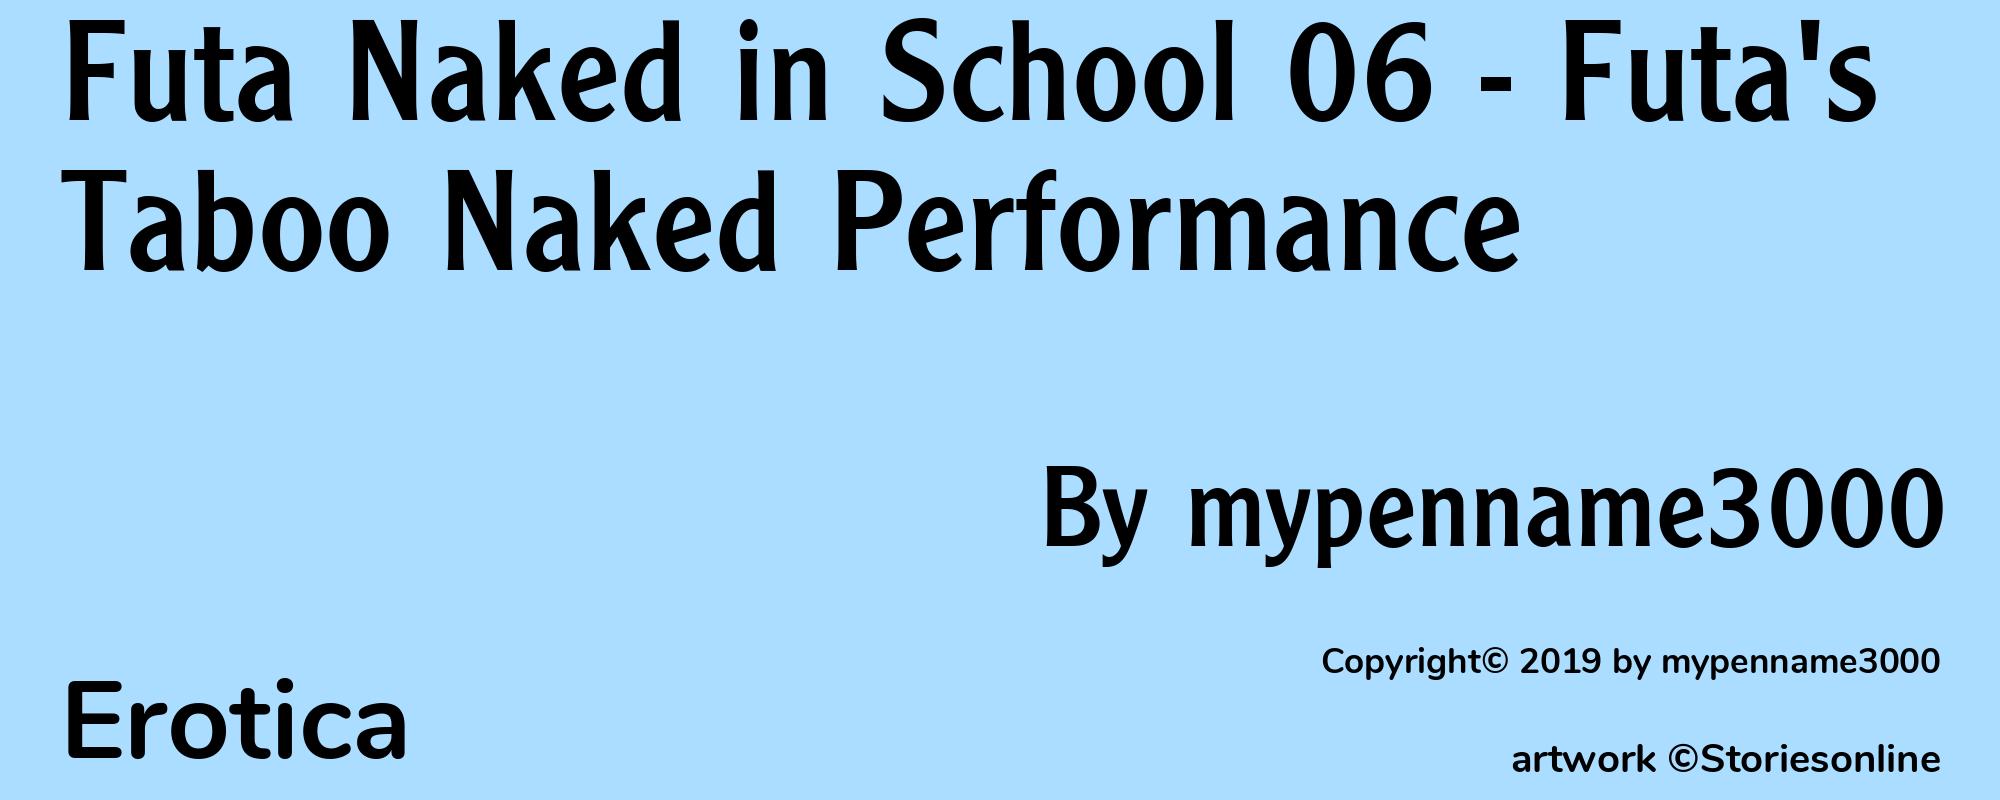 Futa Naked in School 06 - Futa's Taboo Naked Performance - Cover